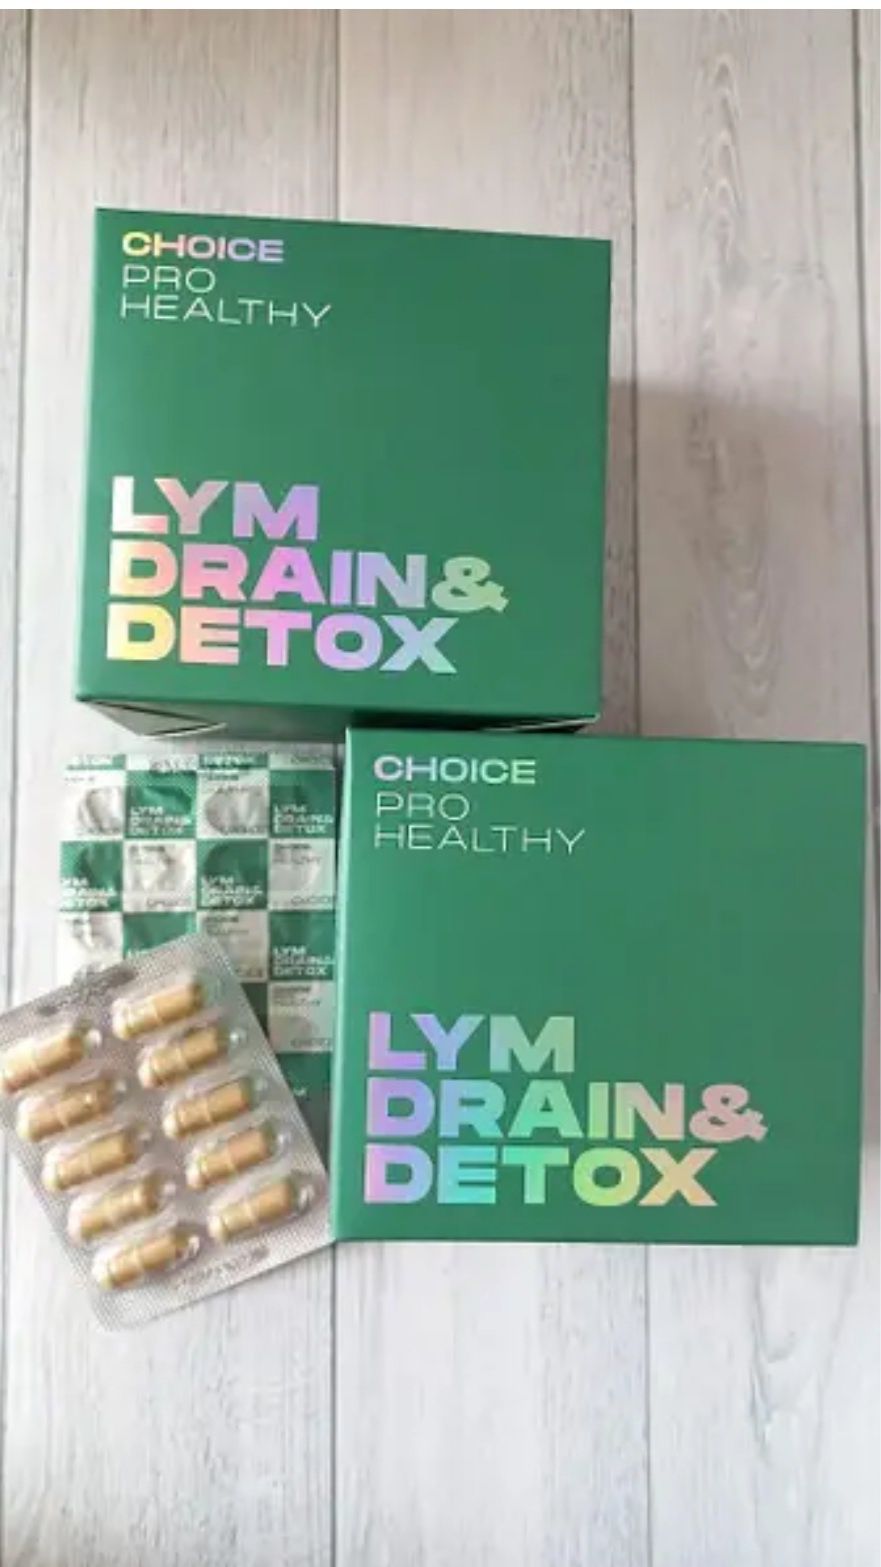 Lum drain & detox choice